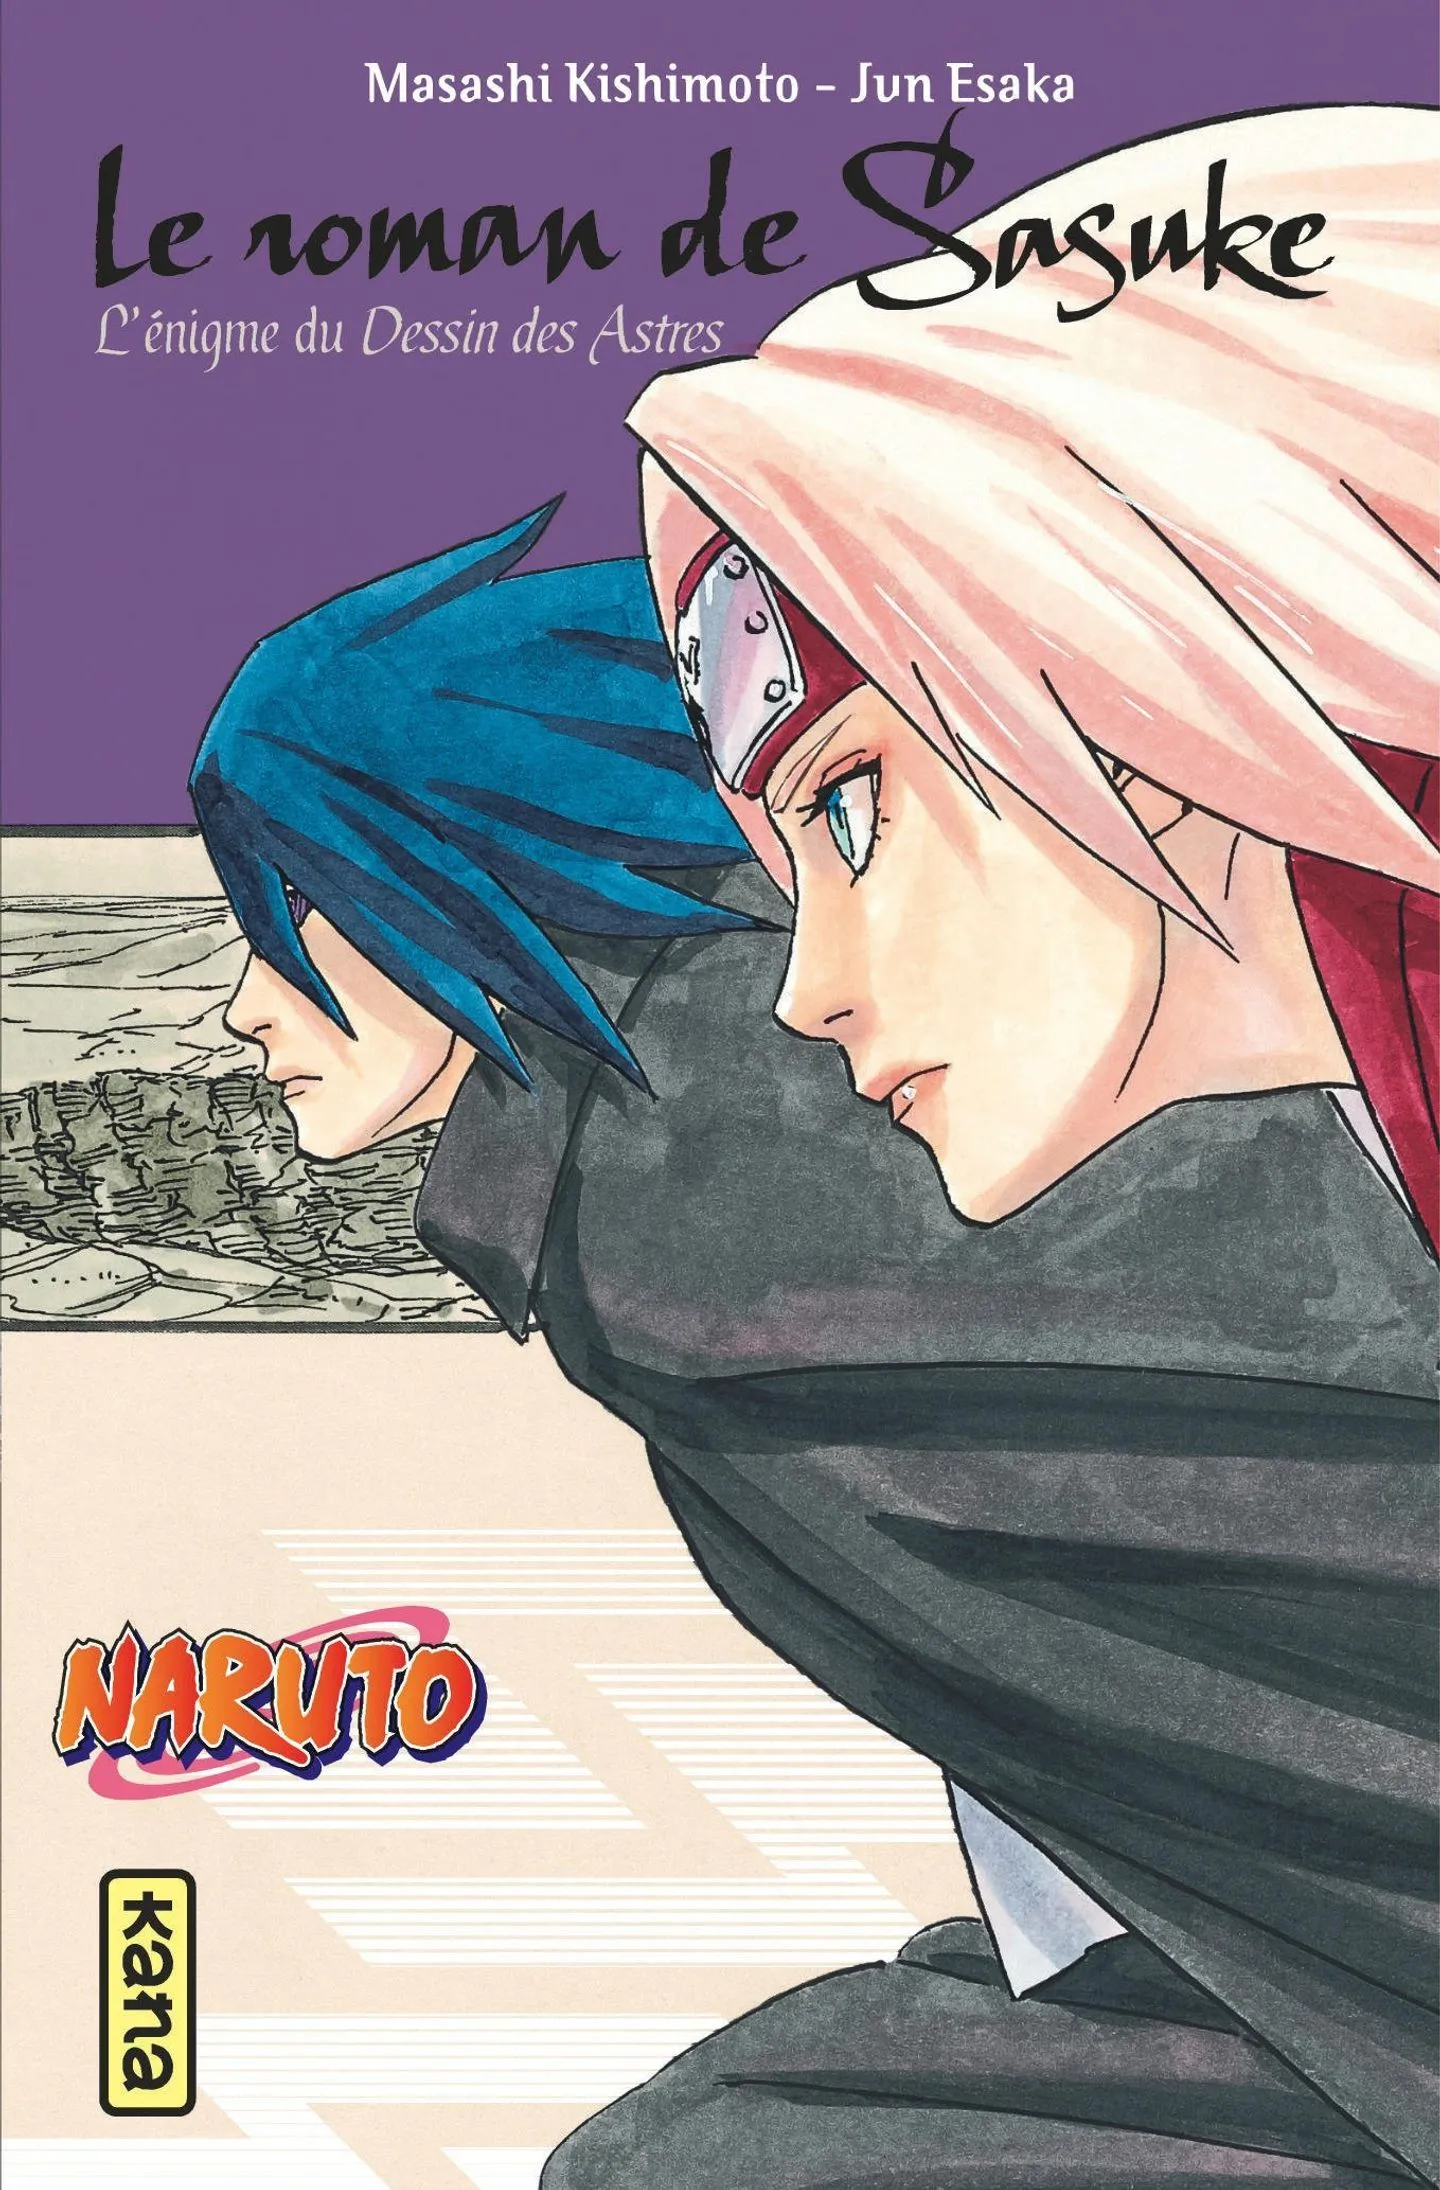 Naruto: Le Roman de Sasuke – L’énigme du Dessin des Astres